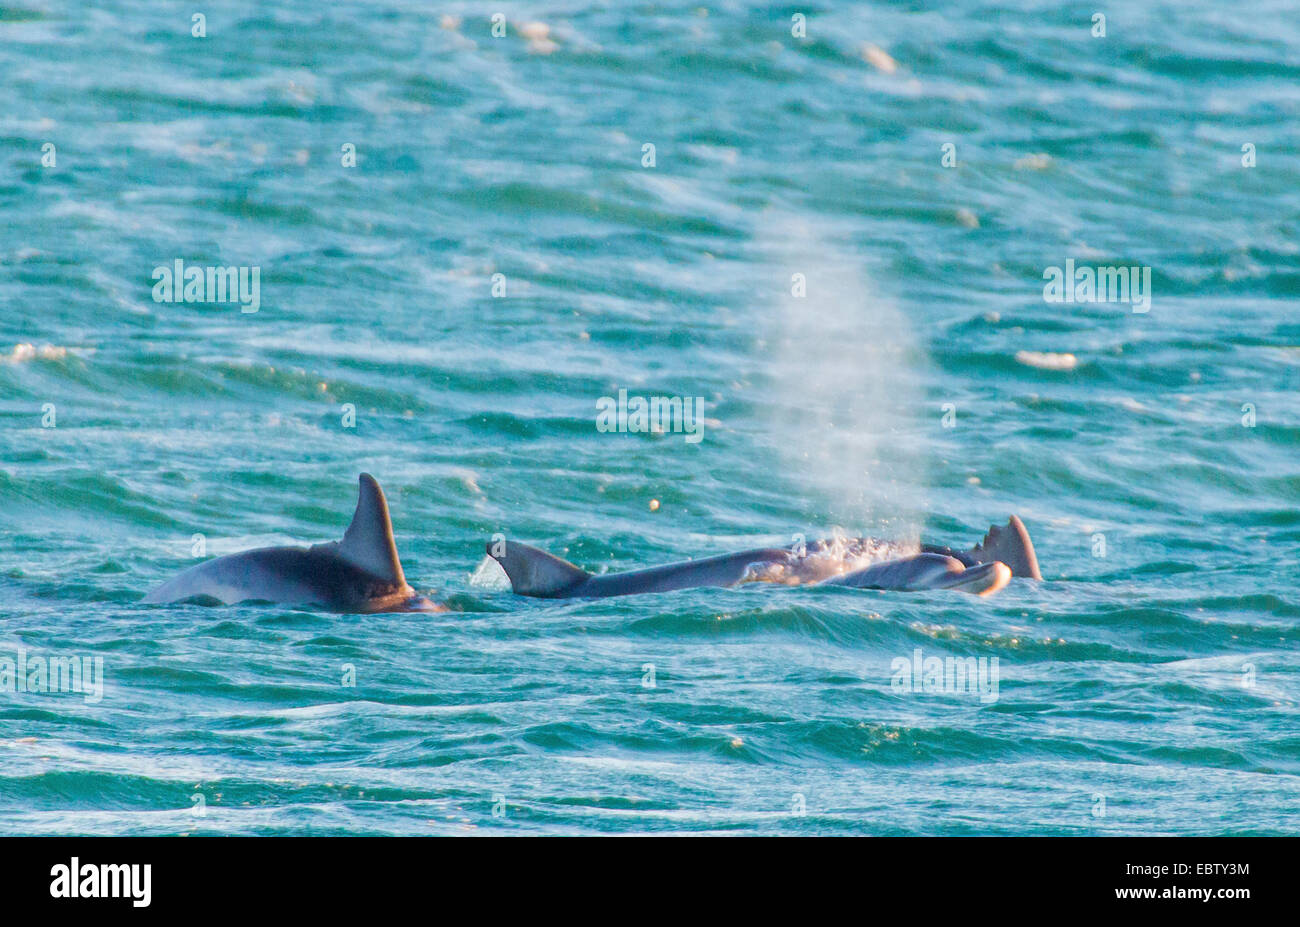 El delfín mular, comunes delfines nariz de botella (Tursiops truncatus), marsopas que suben a la superficie para respirar, Australia, Australia Occidental, Monkey Mia Foto de stock